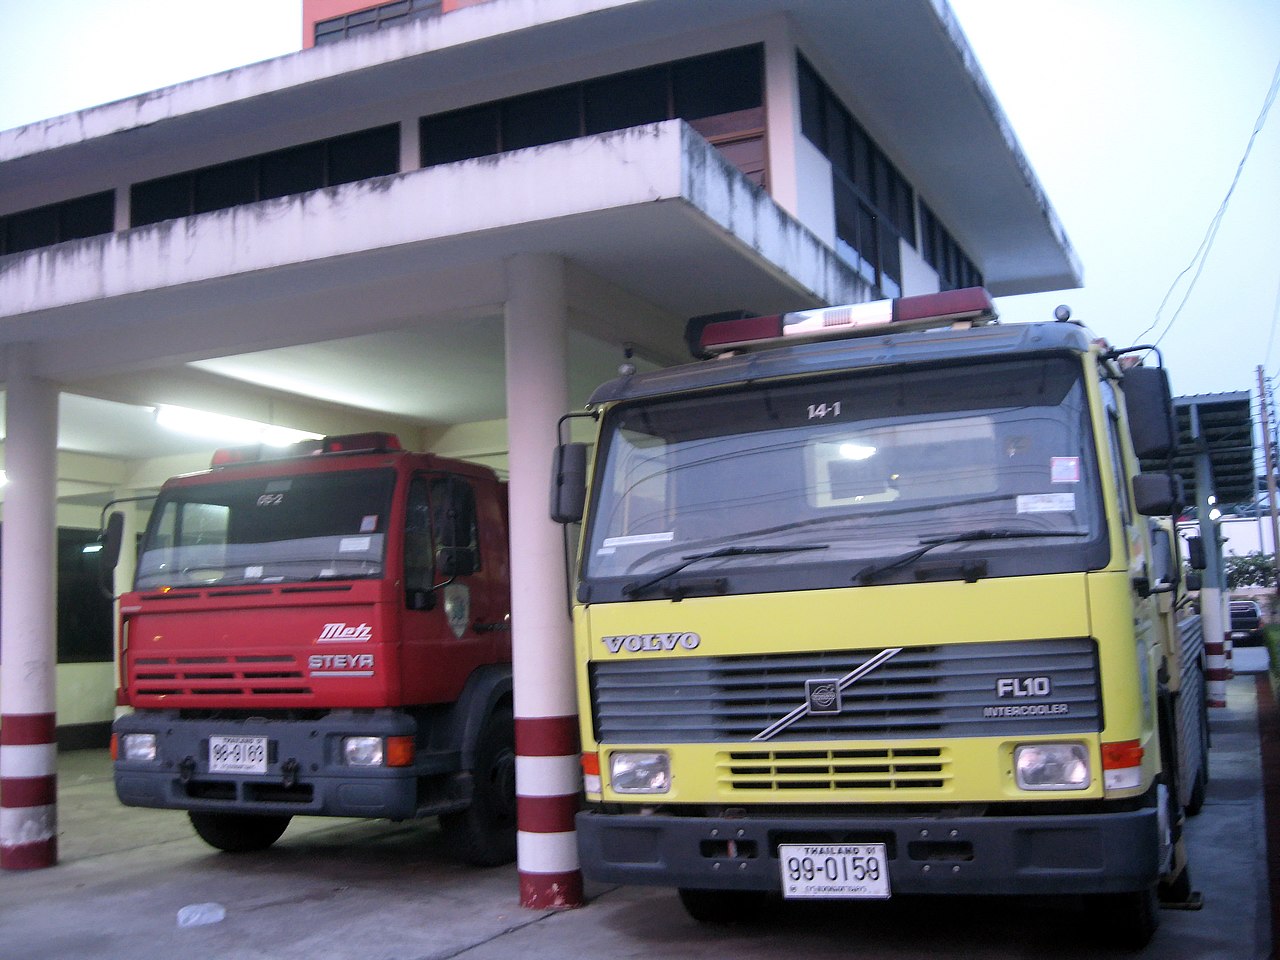 Bang Khen Fire station in Bangkok